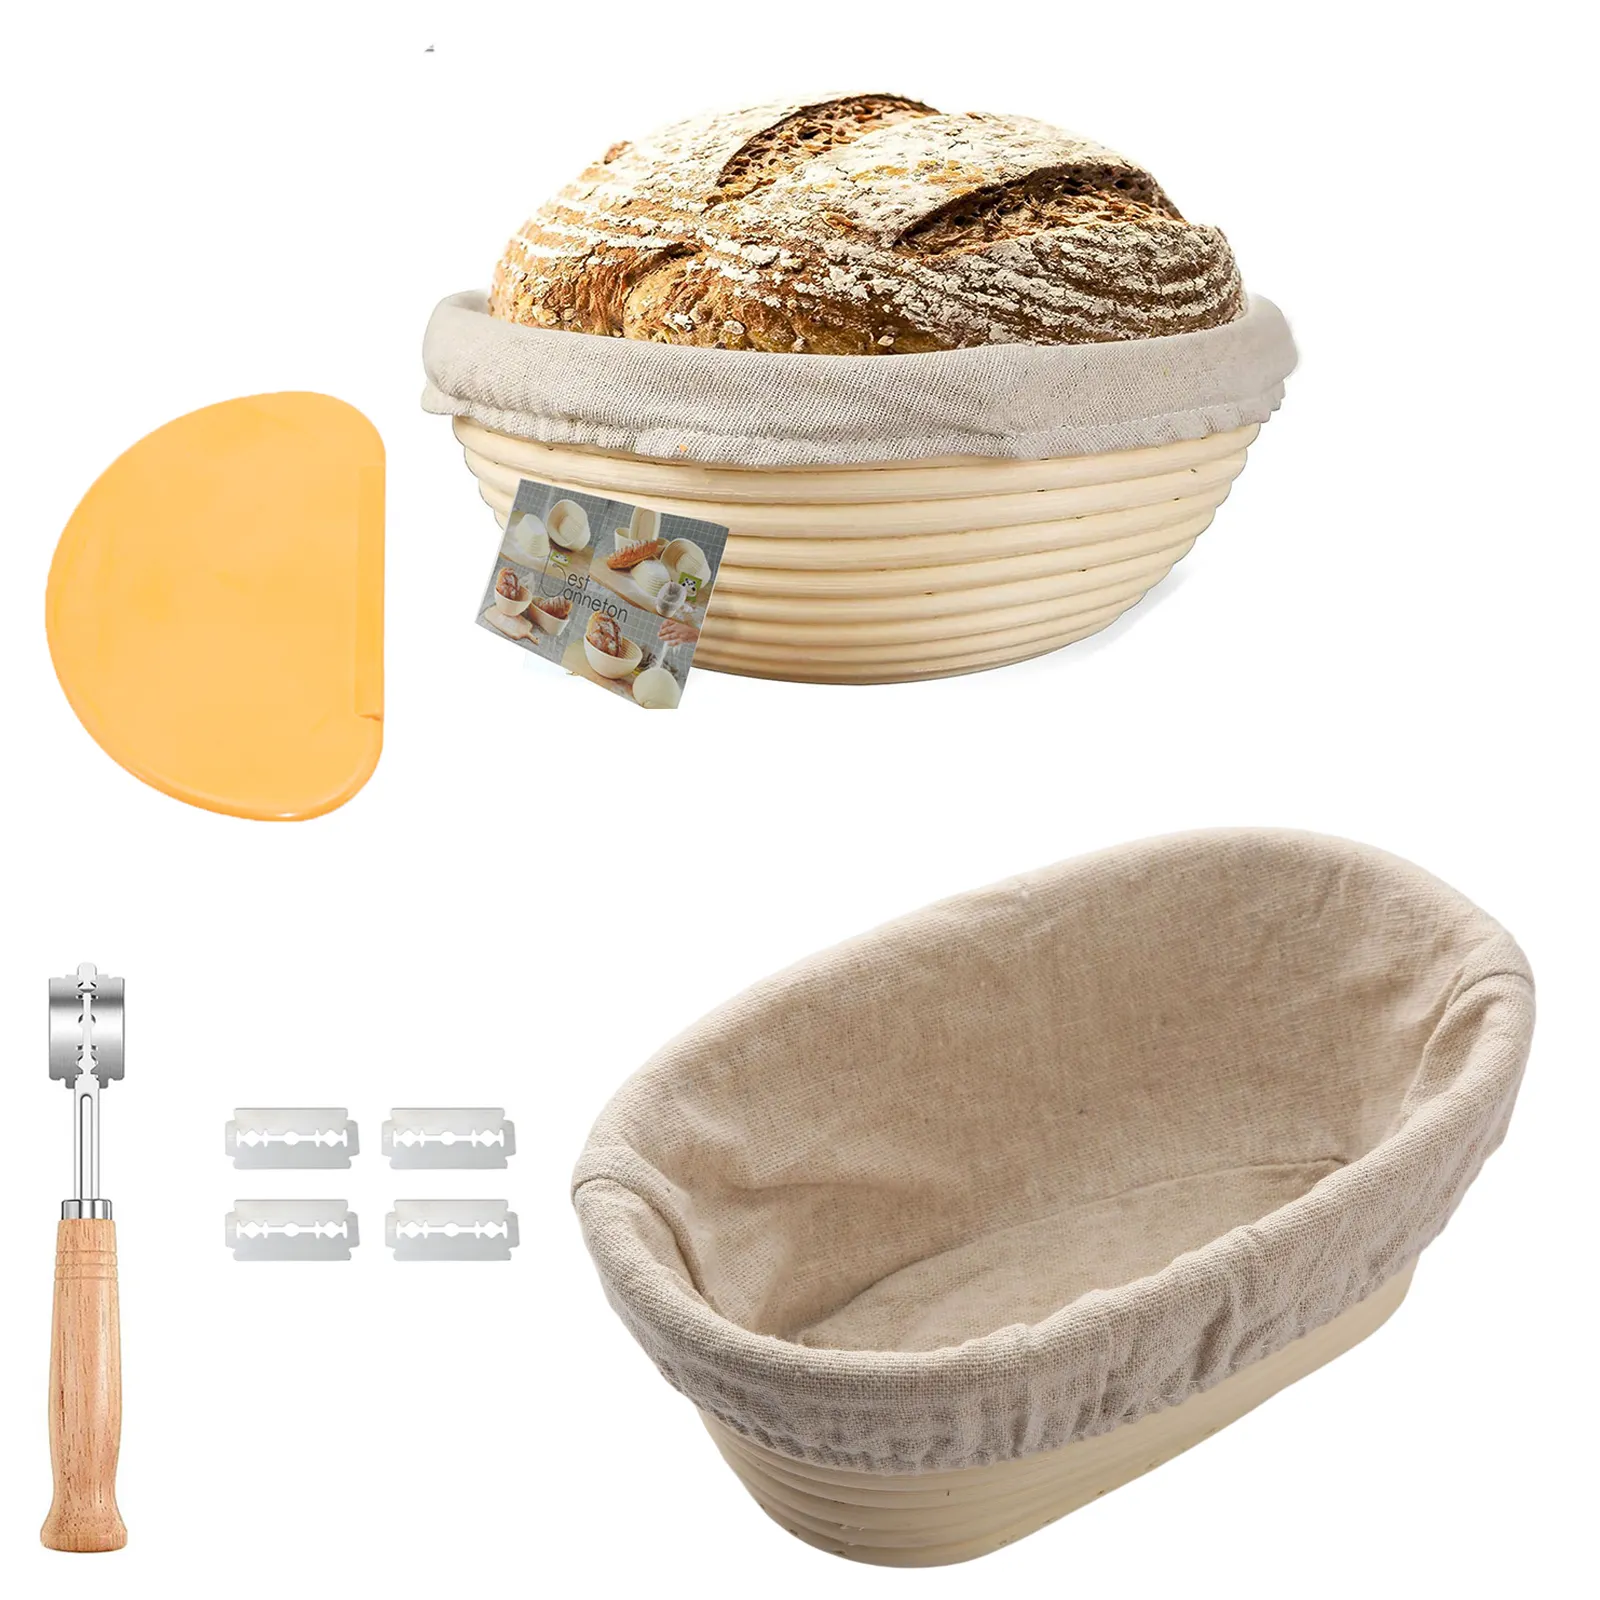 Banneton Bread Proofing Basket 8 9 10 inch Indonesia Rattan Sourdough Basket Bowl Tool Kit Sets for Baking Baker Customization